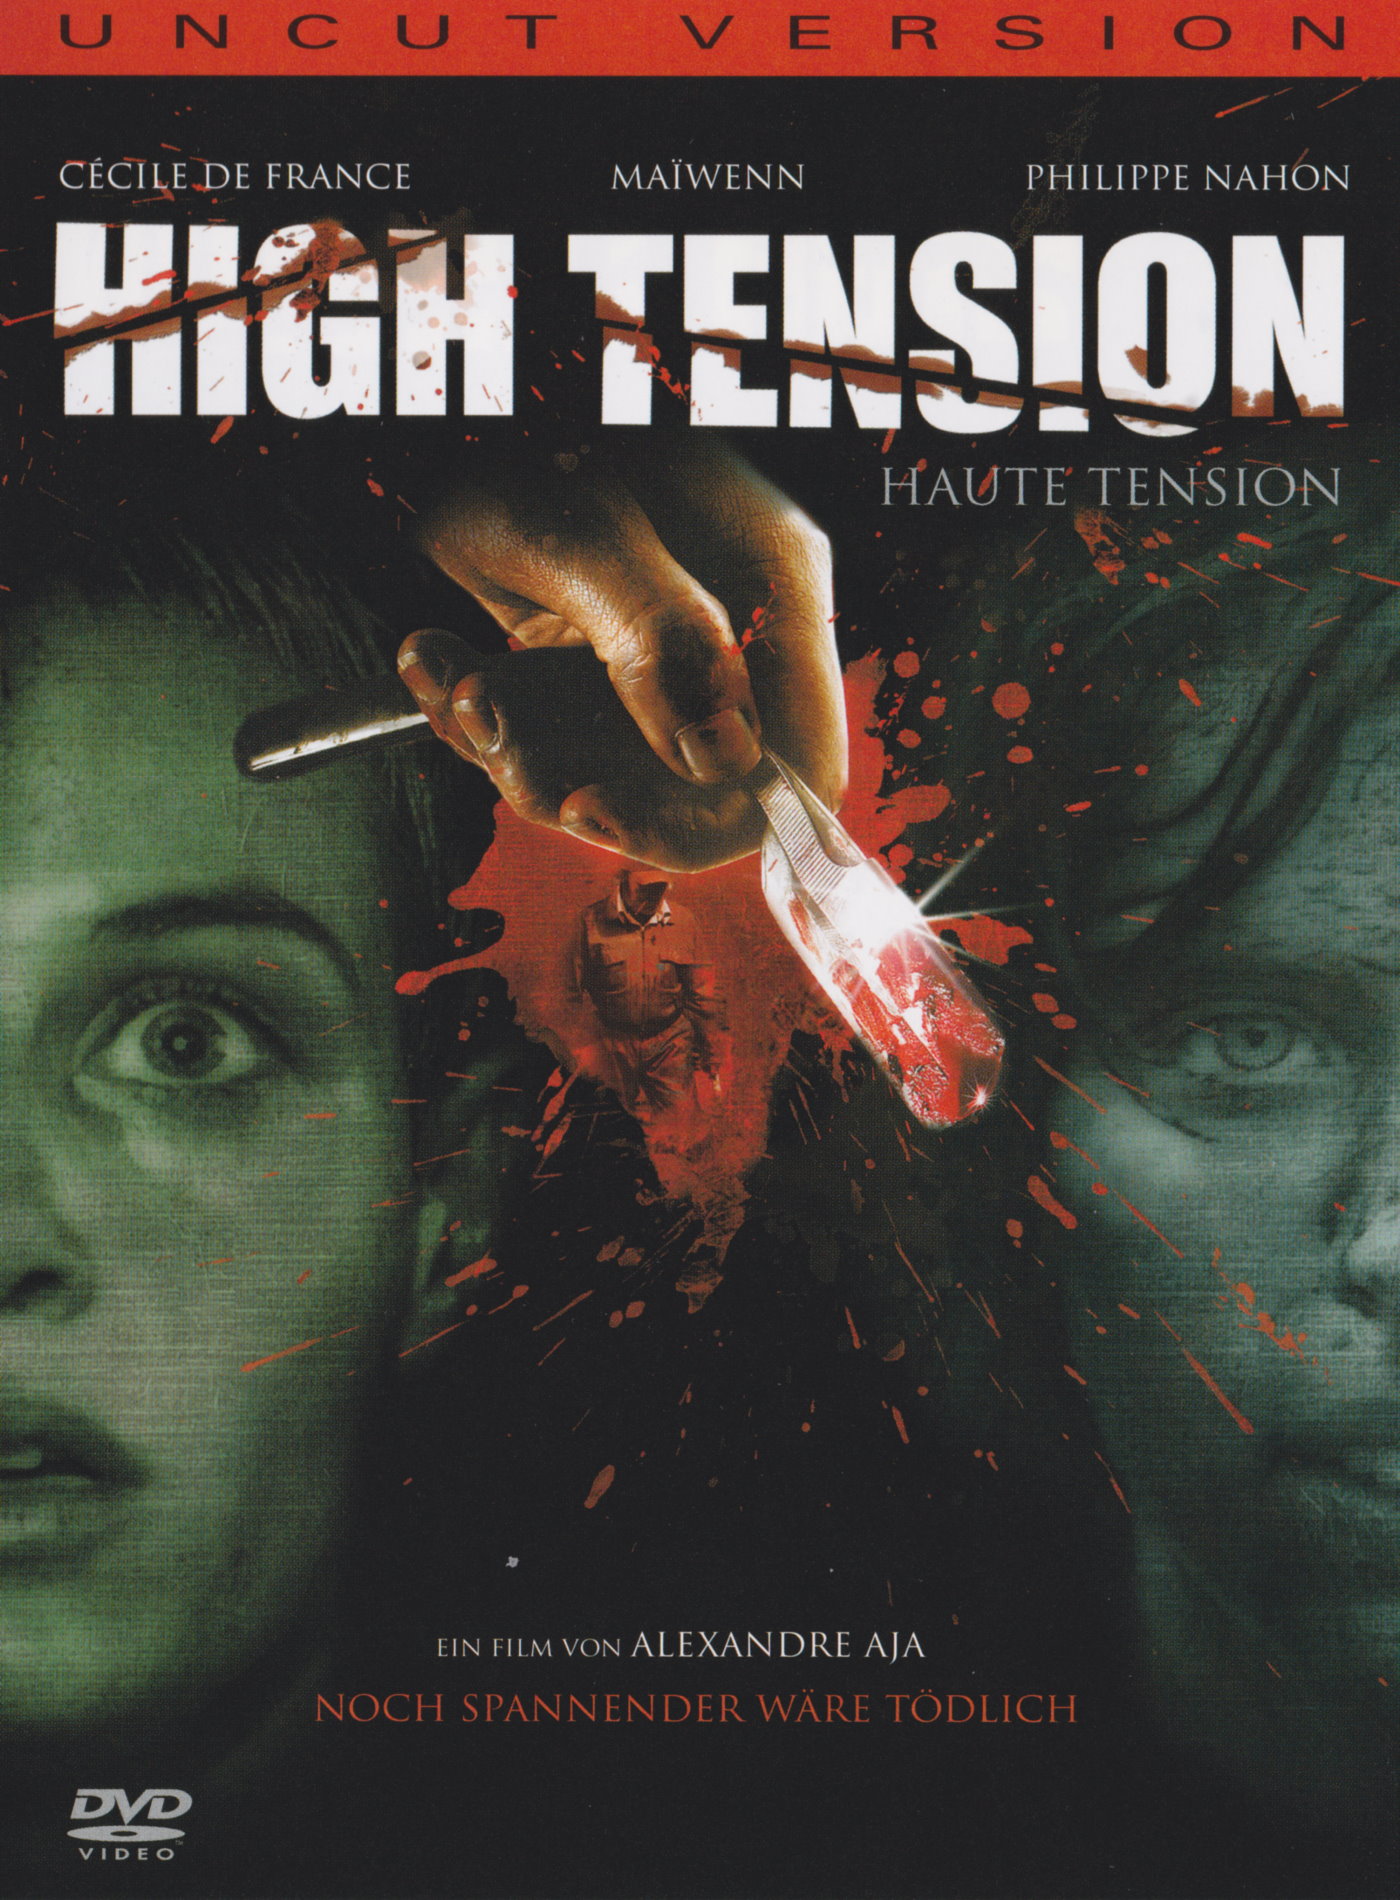 Cover - High Tension.jpg